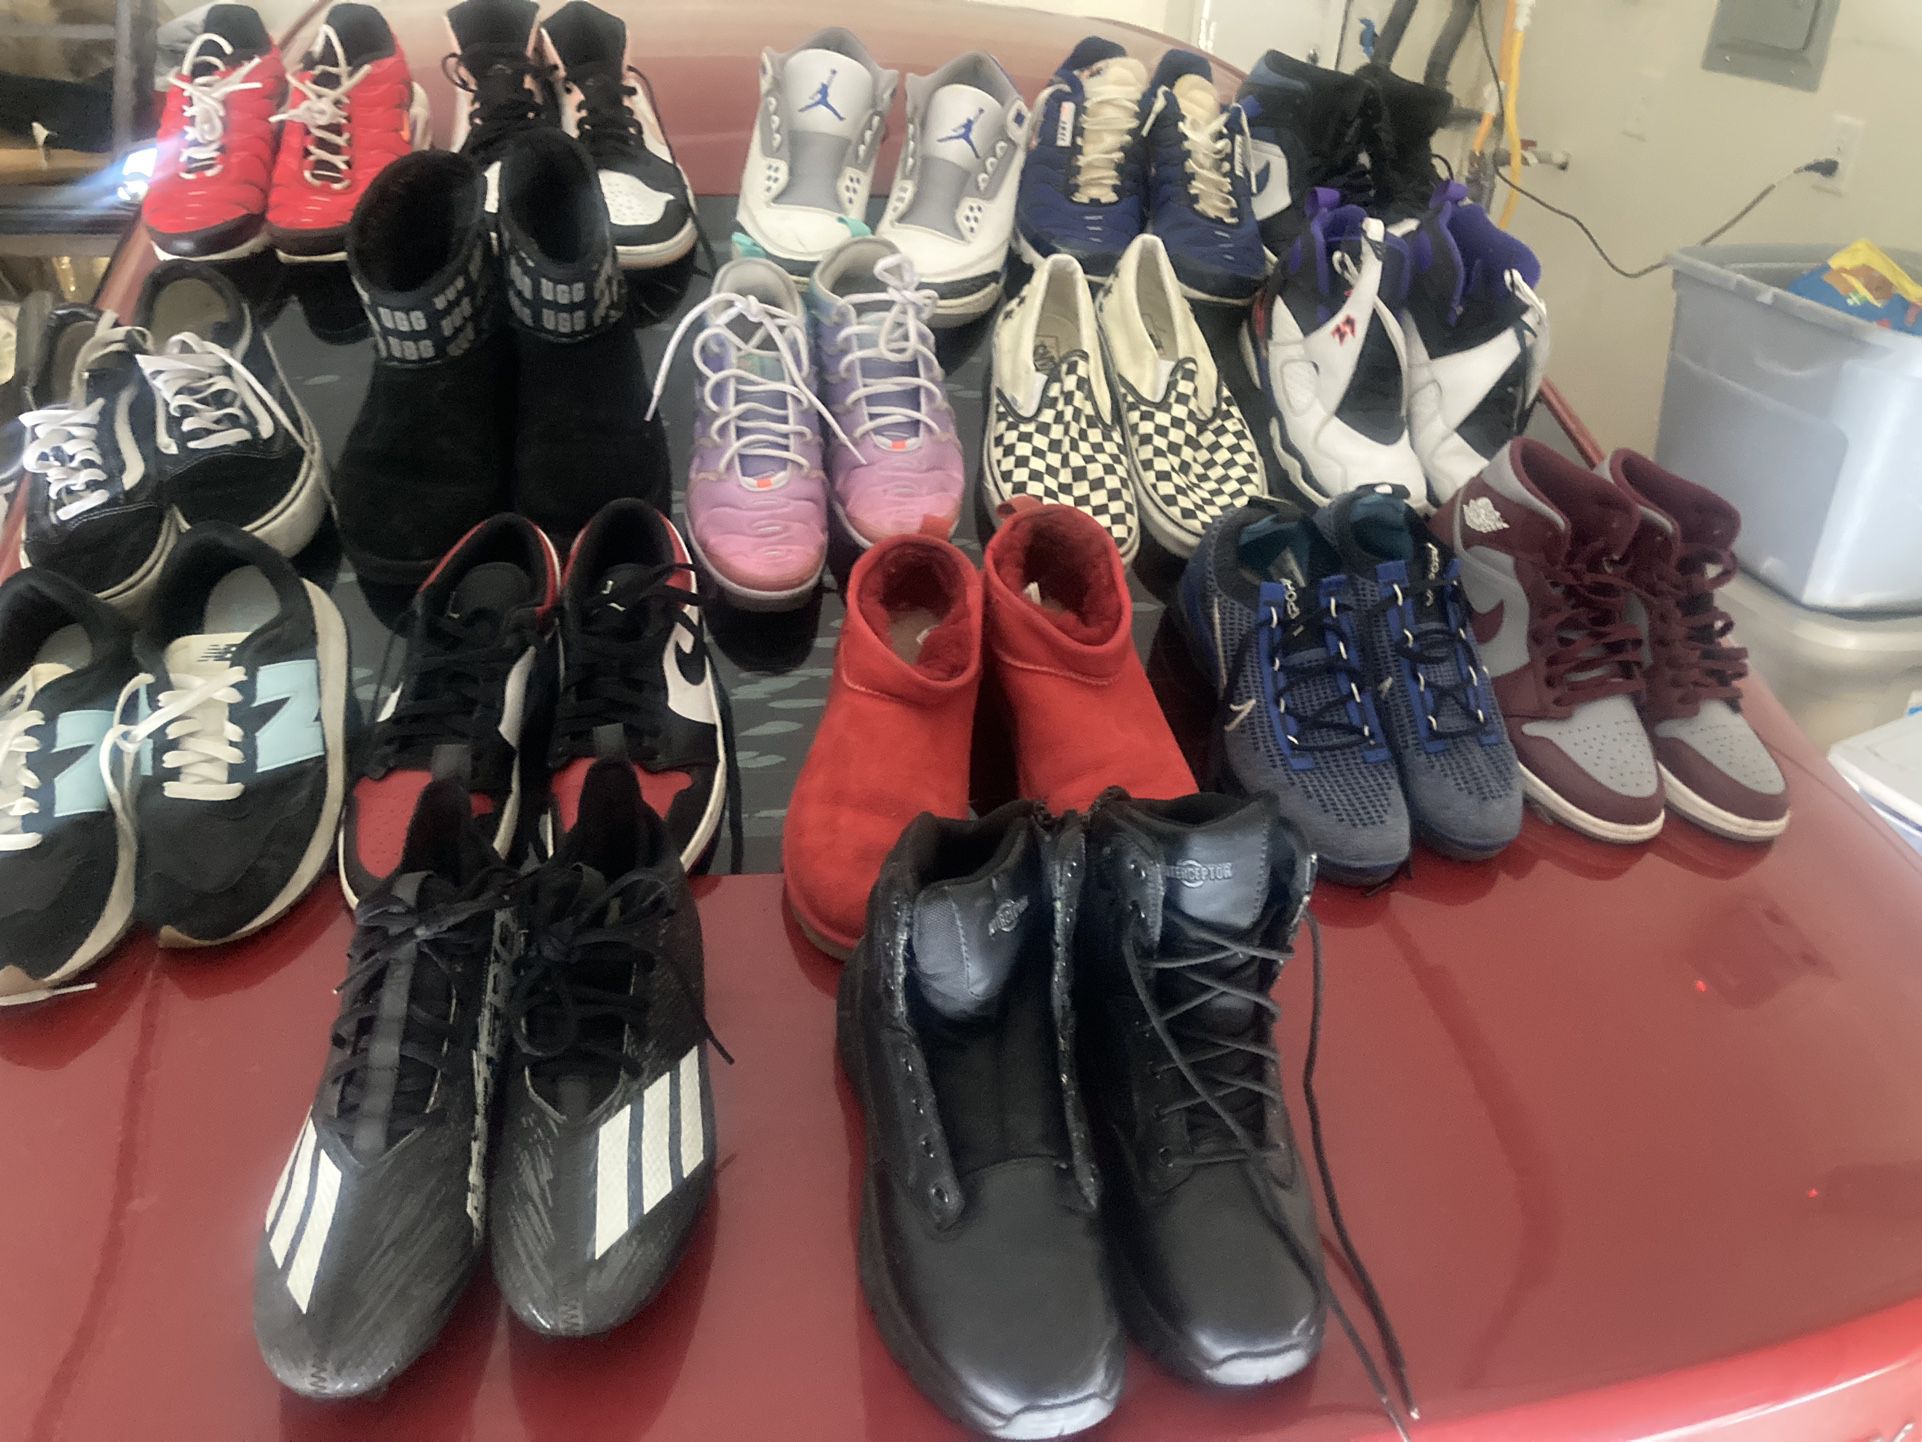 shoes Jordans nikes work boots vans uggs new balance football cleats